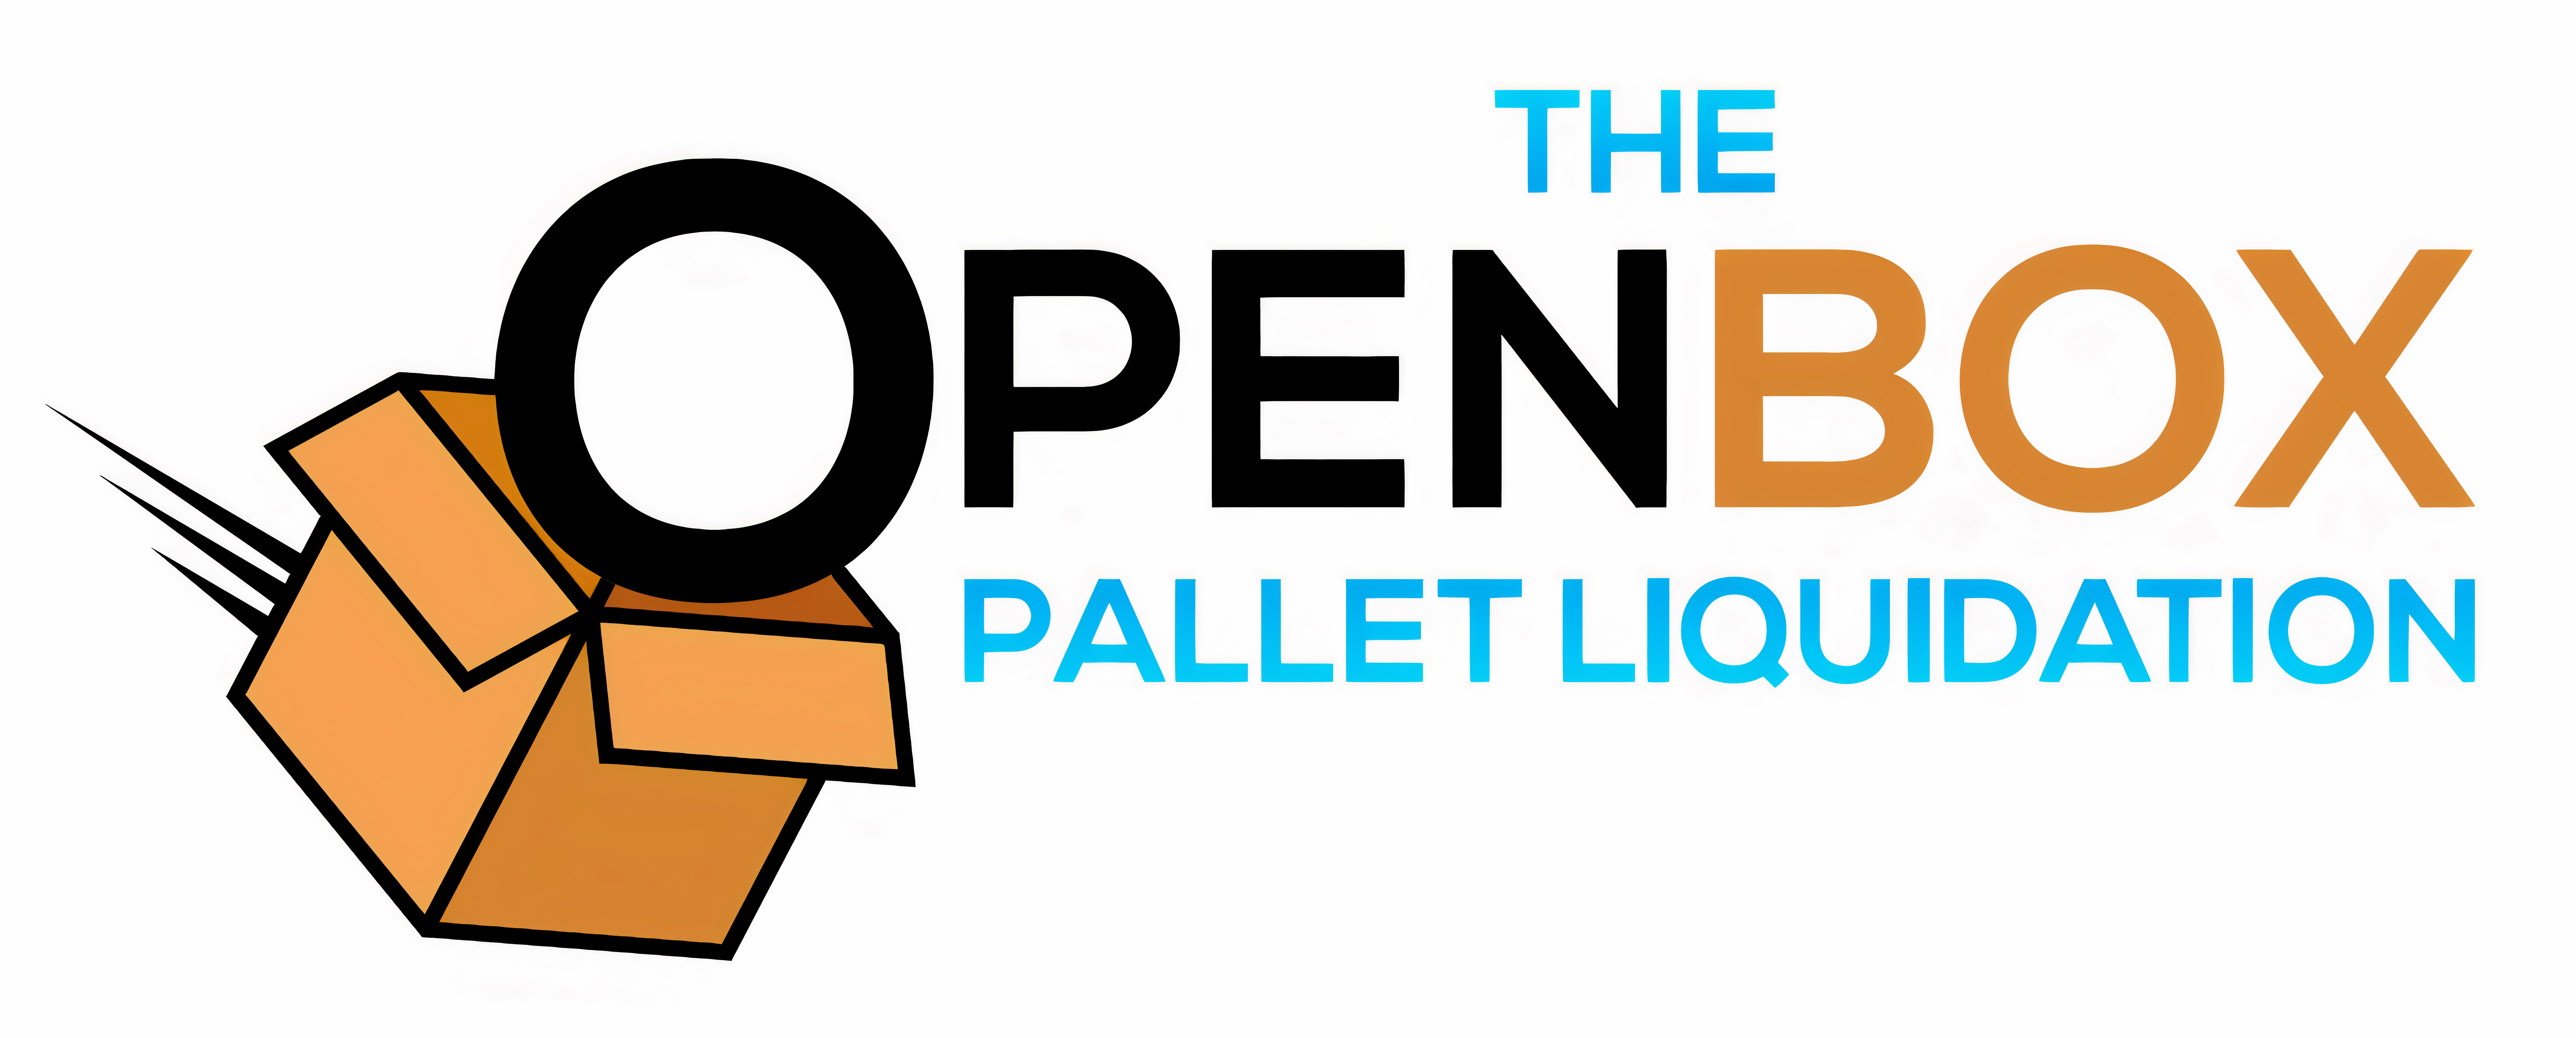 Open Box Pallet Liquidation